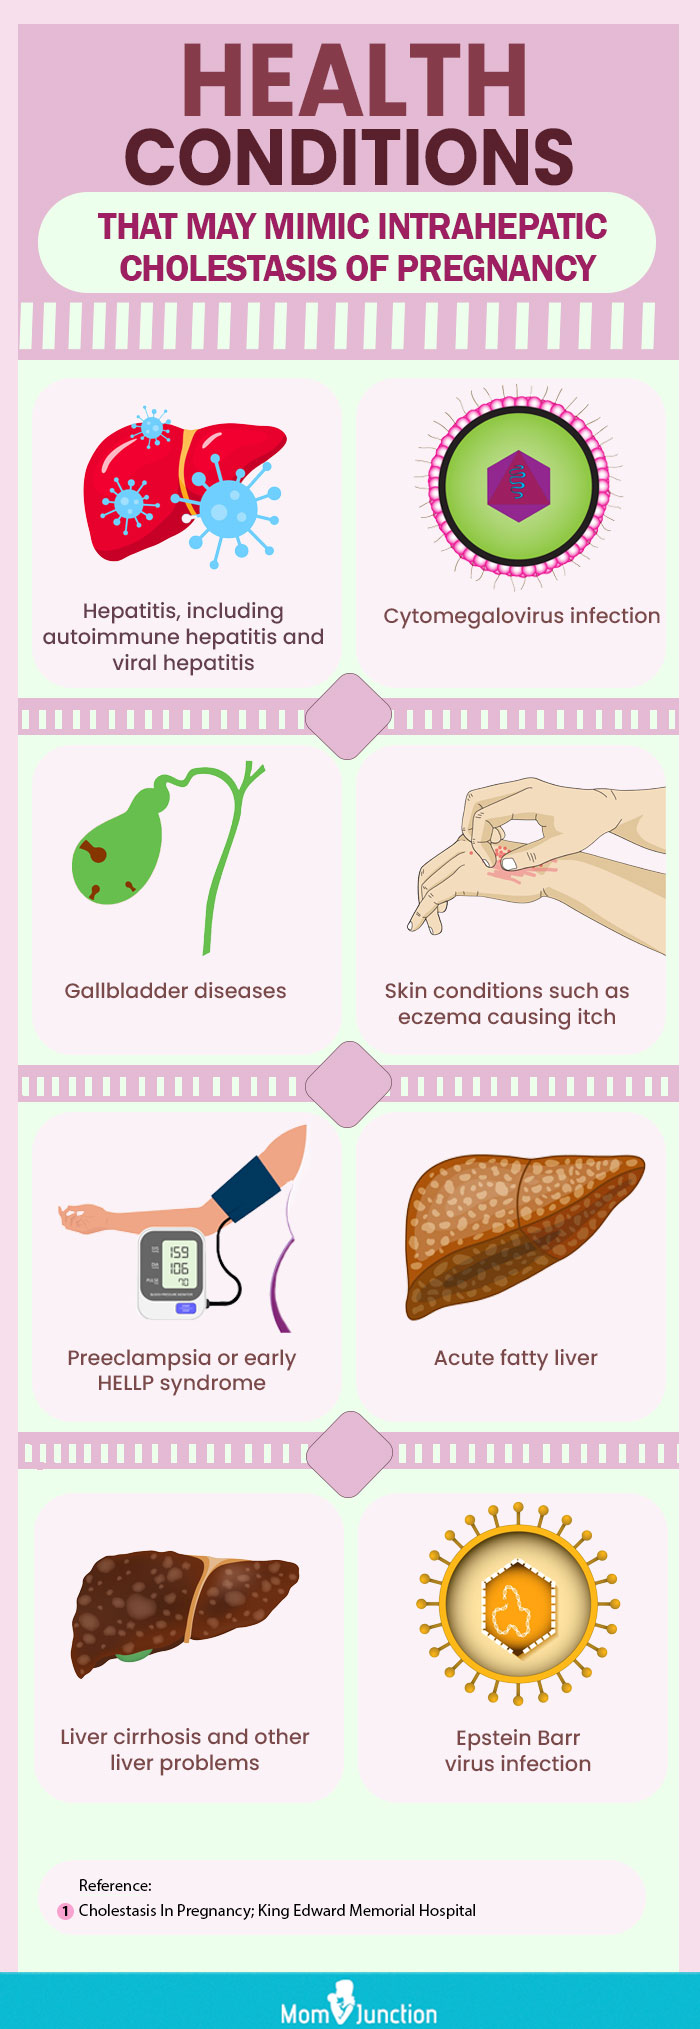 cholestasis of pregnancy (infographic)